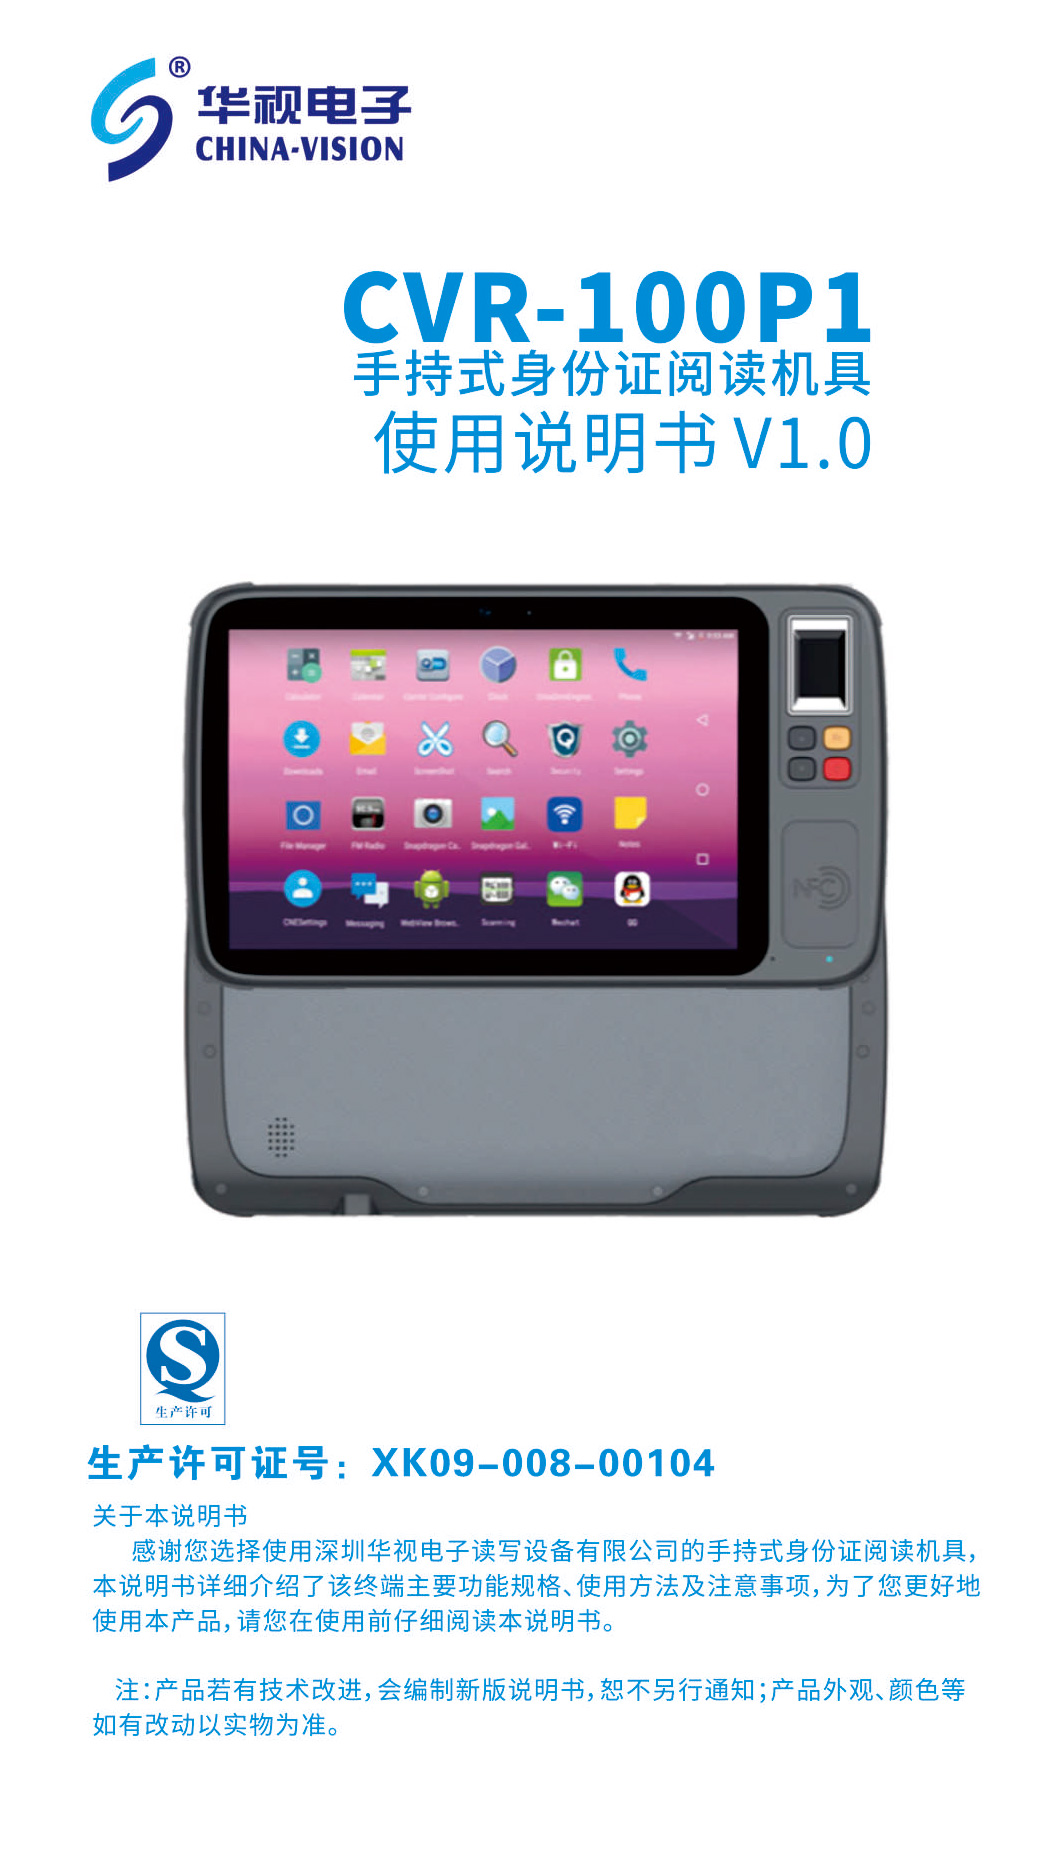 CVR-100P1手持式身份证阅读机具说明书_11.jpg